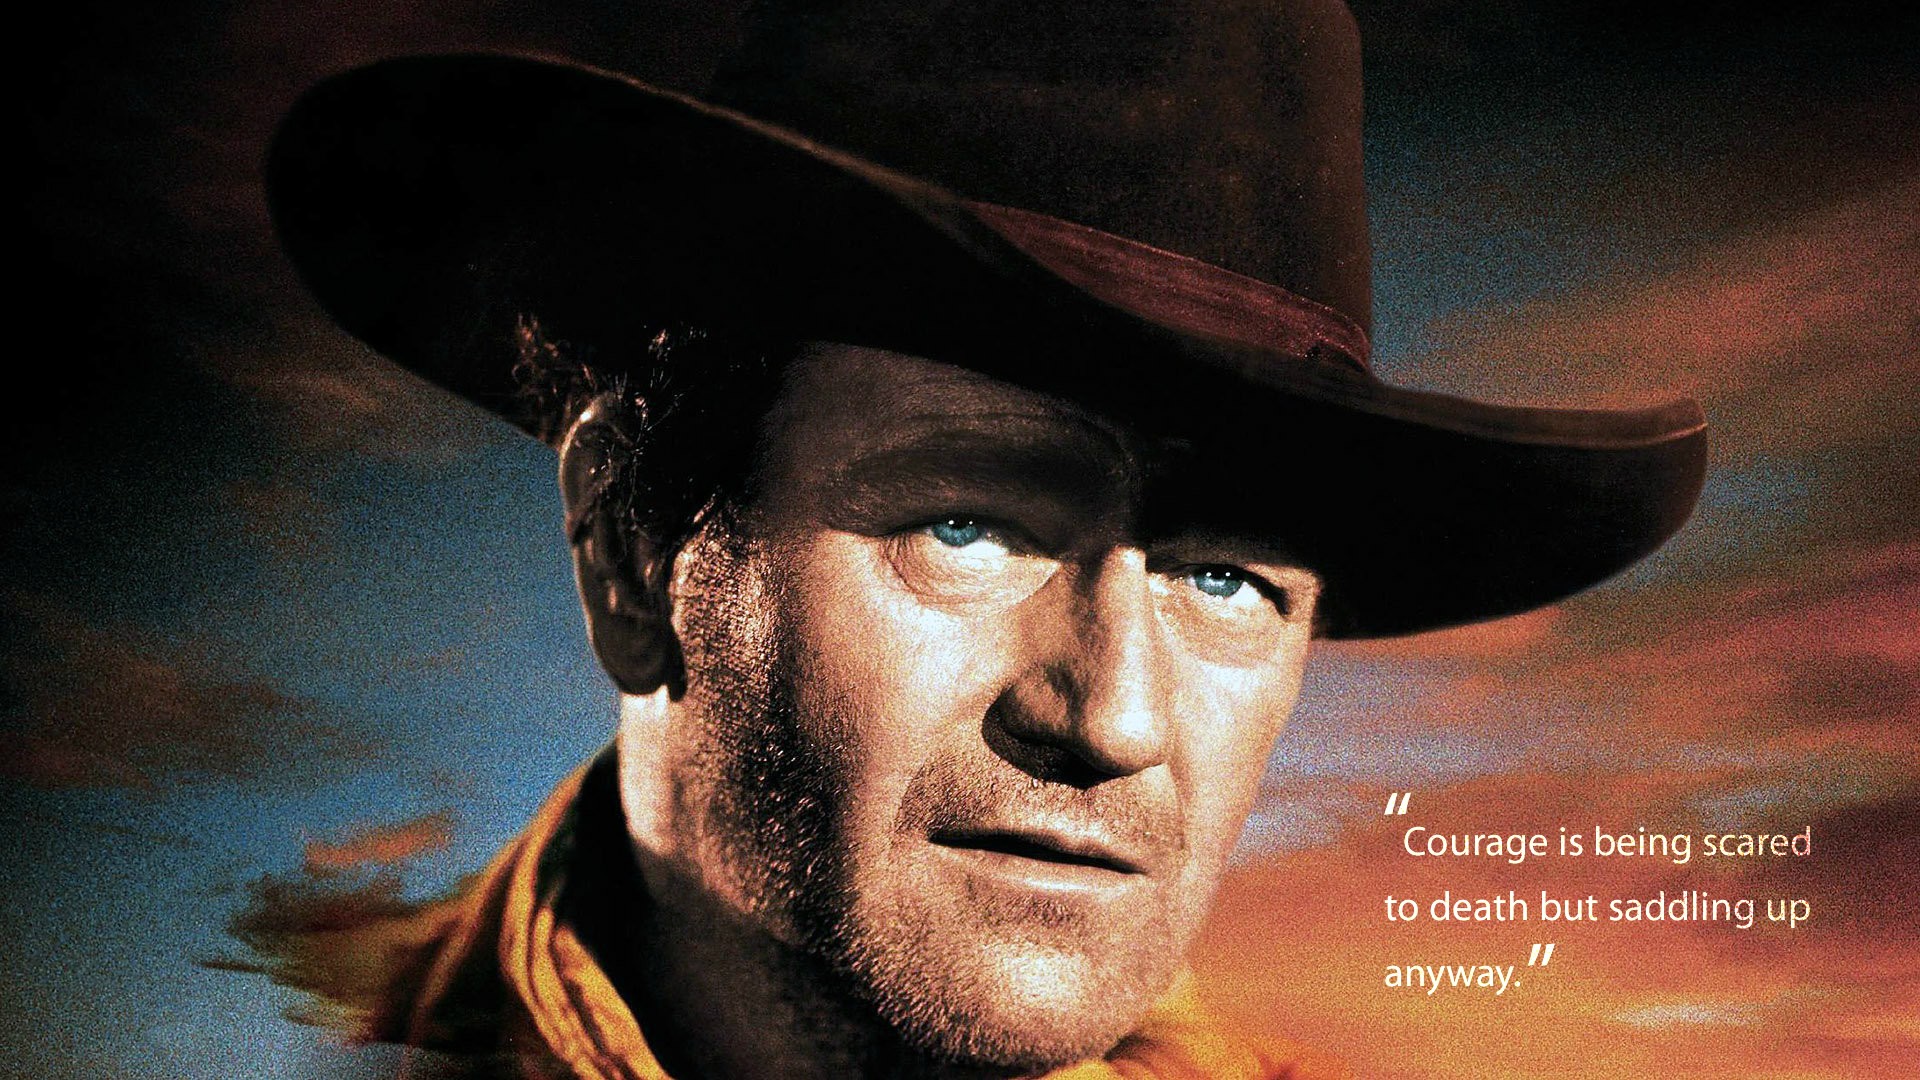 John Wayne Actor Image Western Movies Desktop Image Picture For